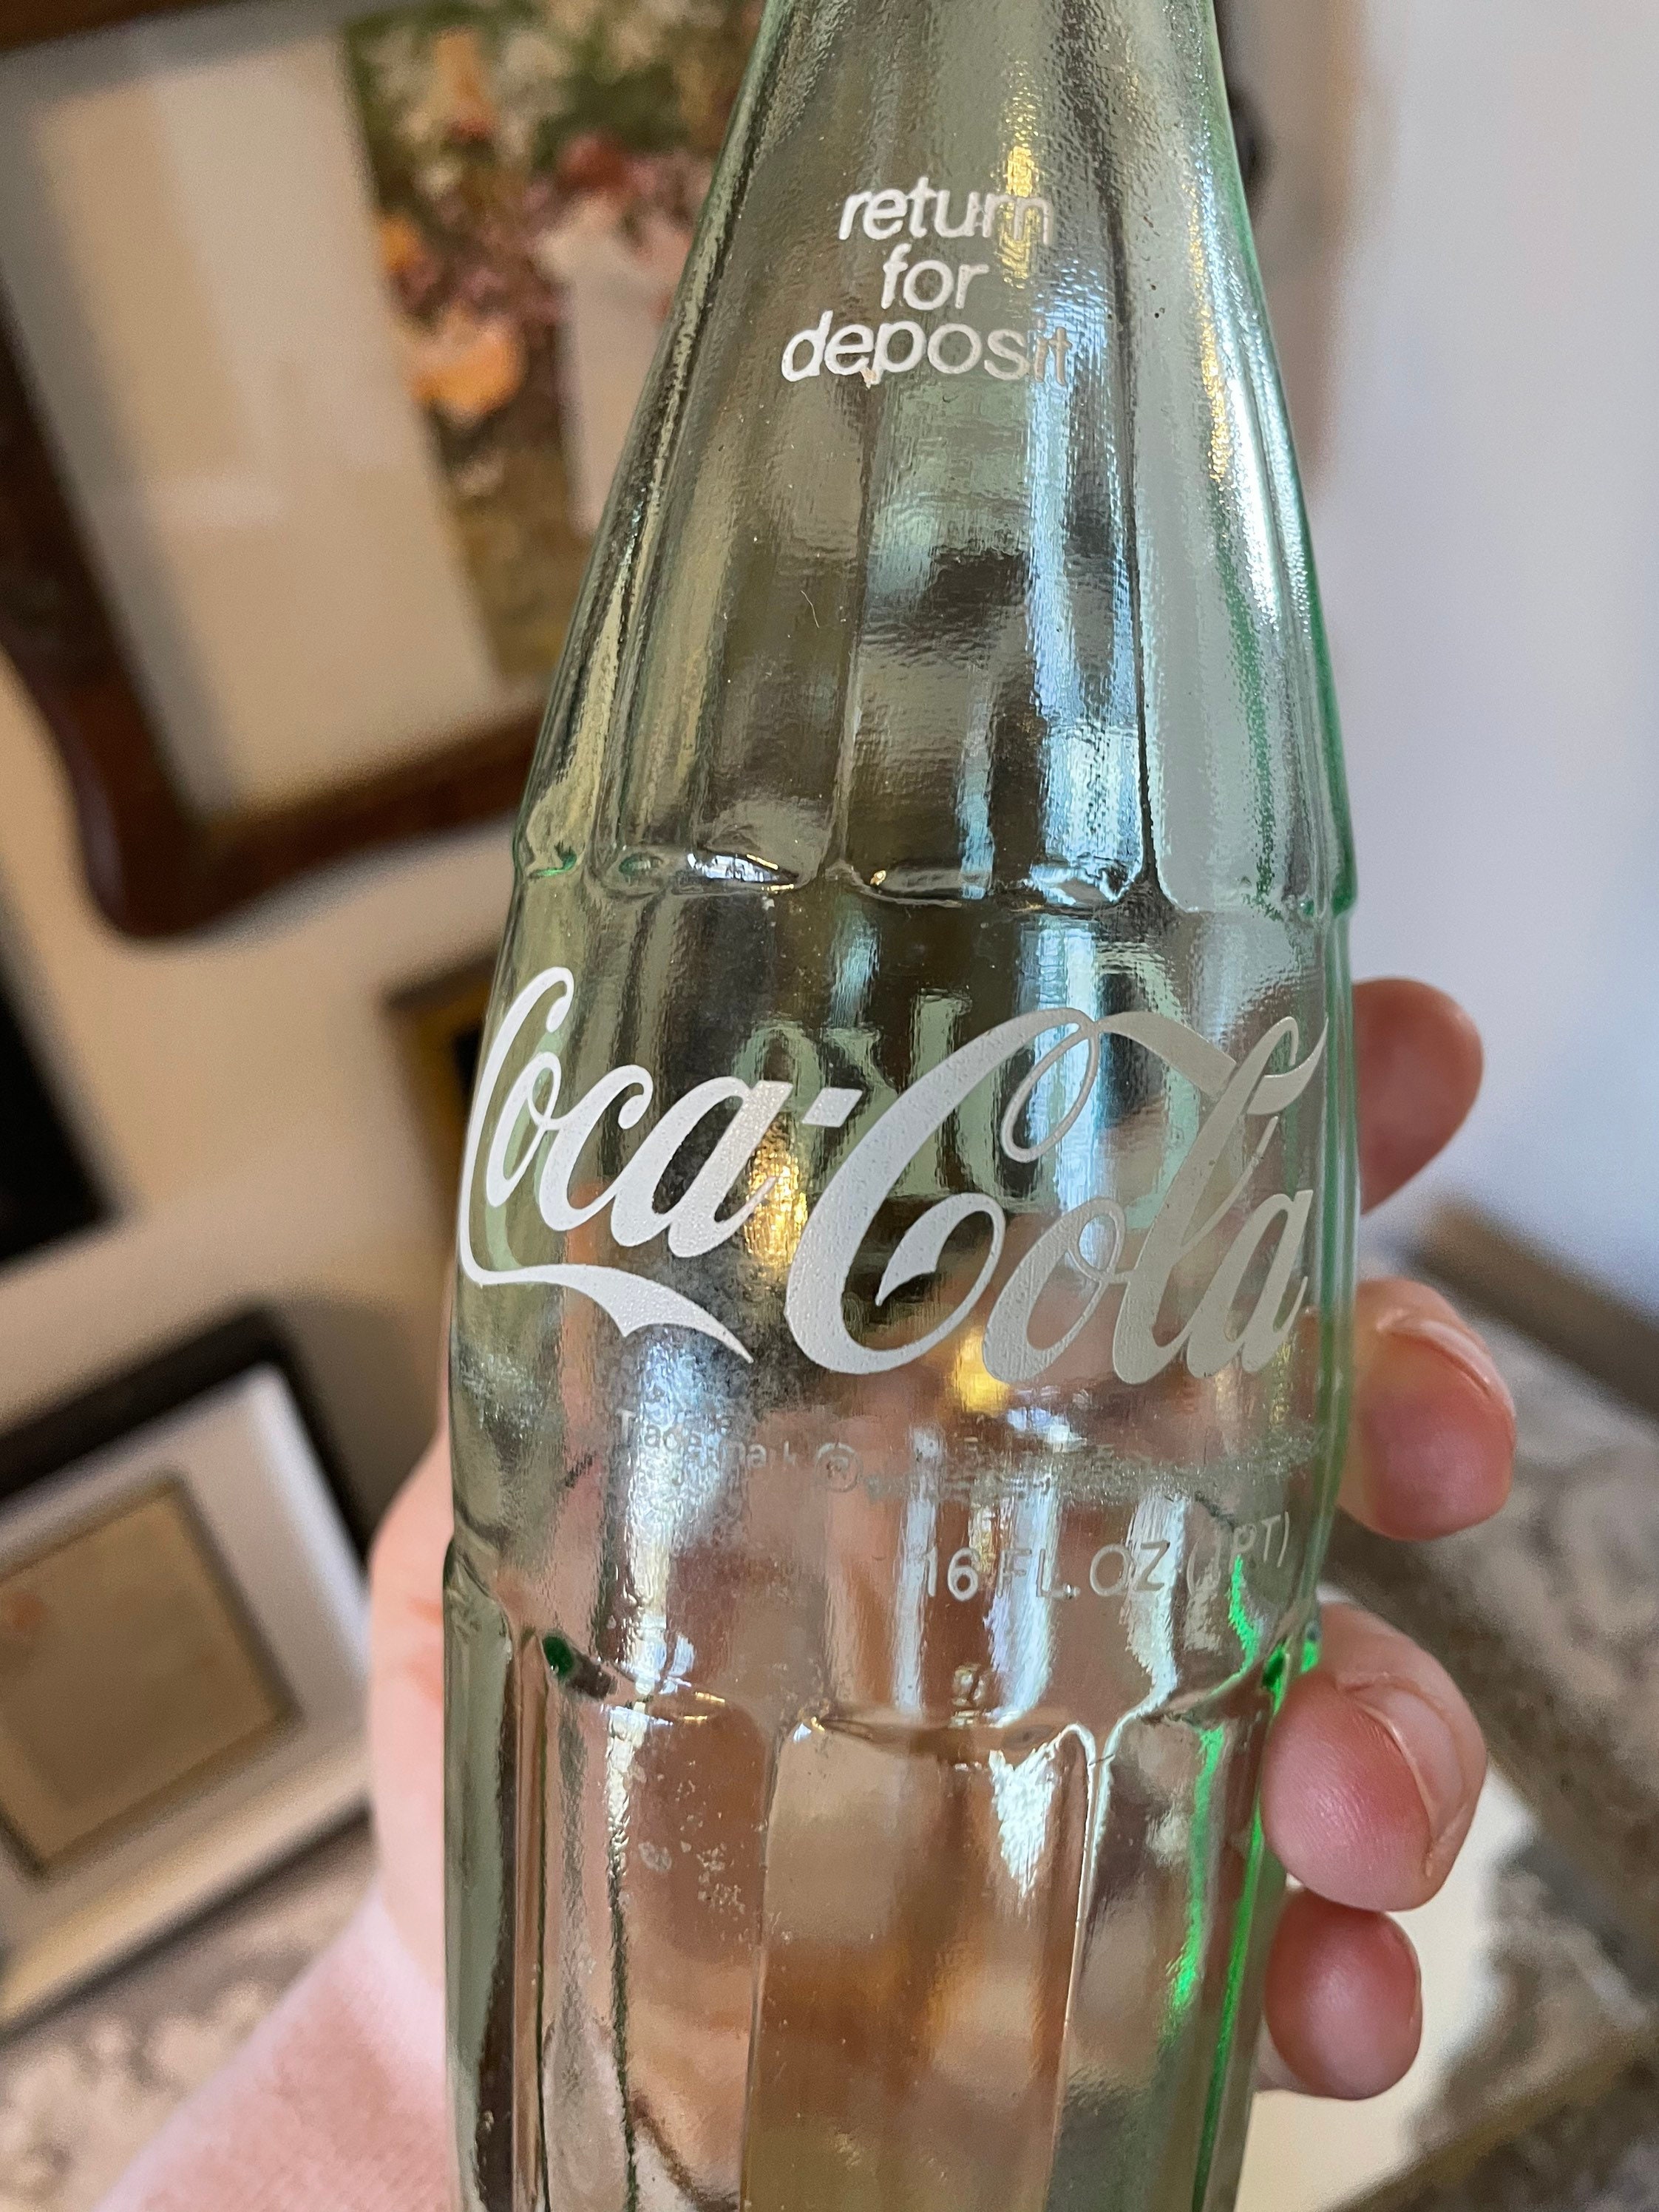 Coca-Cola Glass Water Bottle W/Red Silicone 16oz.